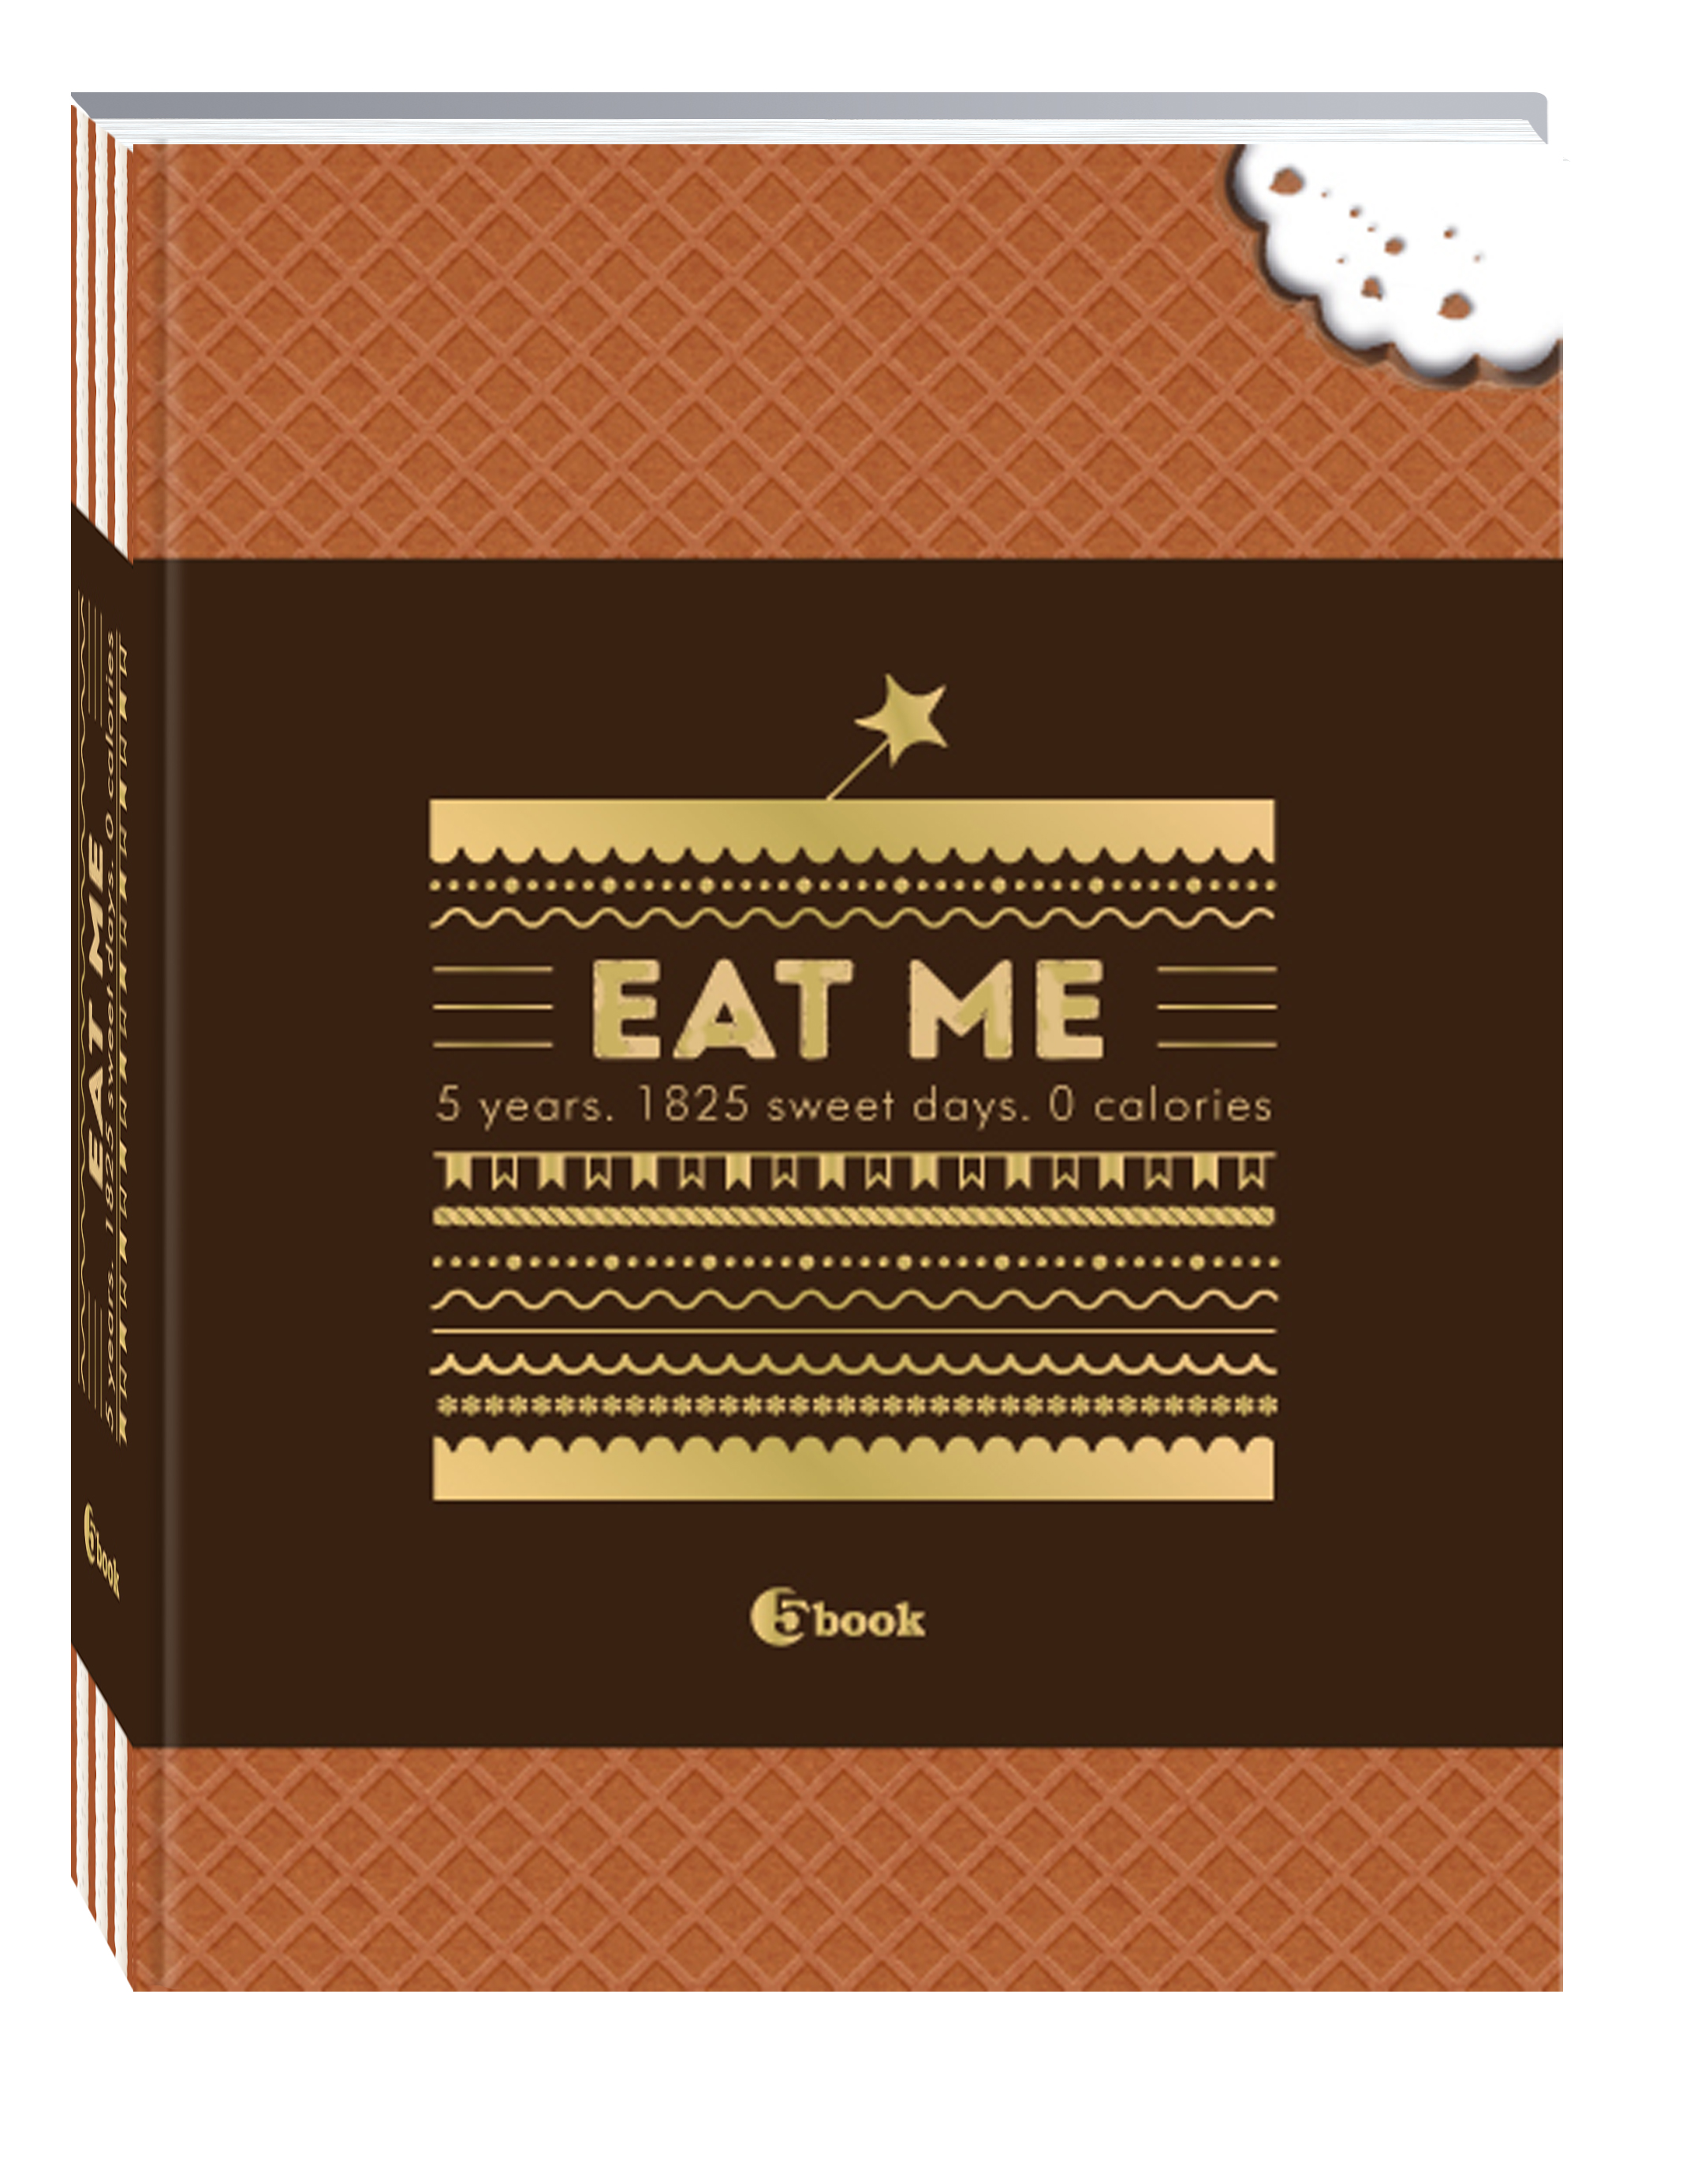 EAT ME. 5 years. 1825 sweet days. 0 calories